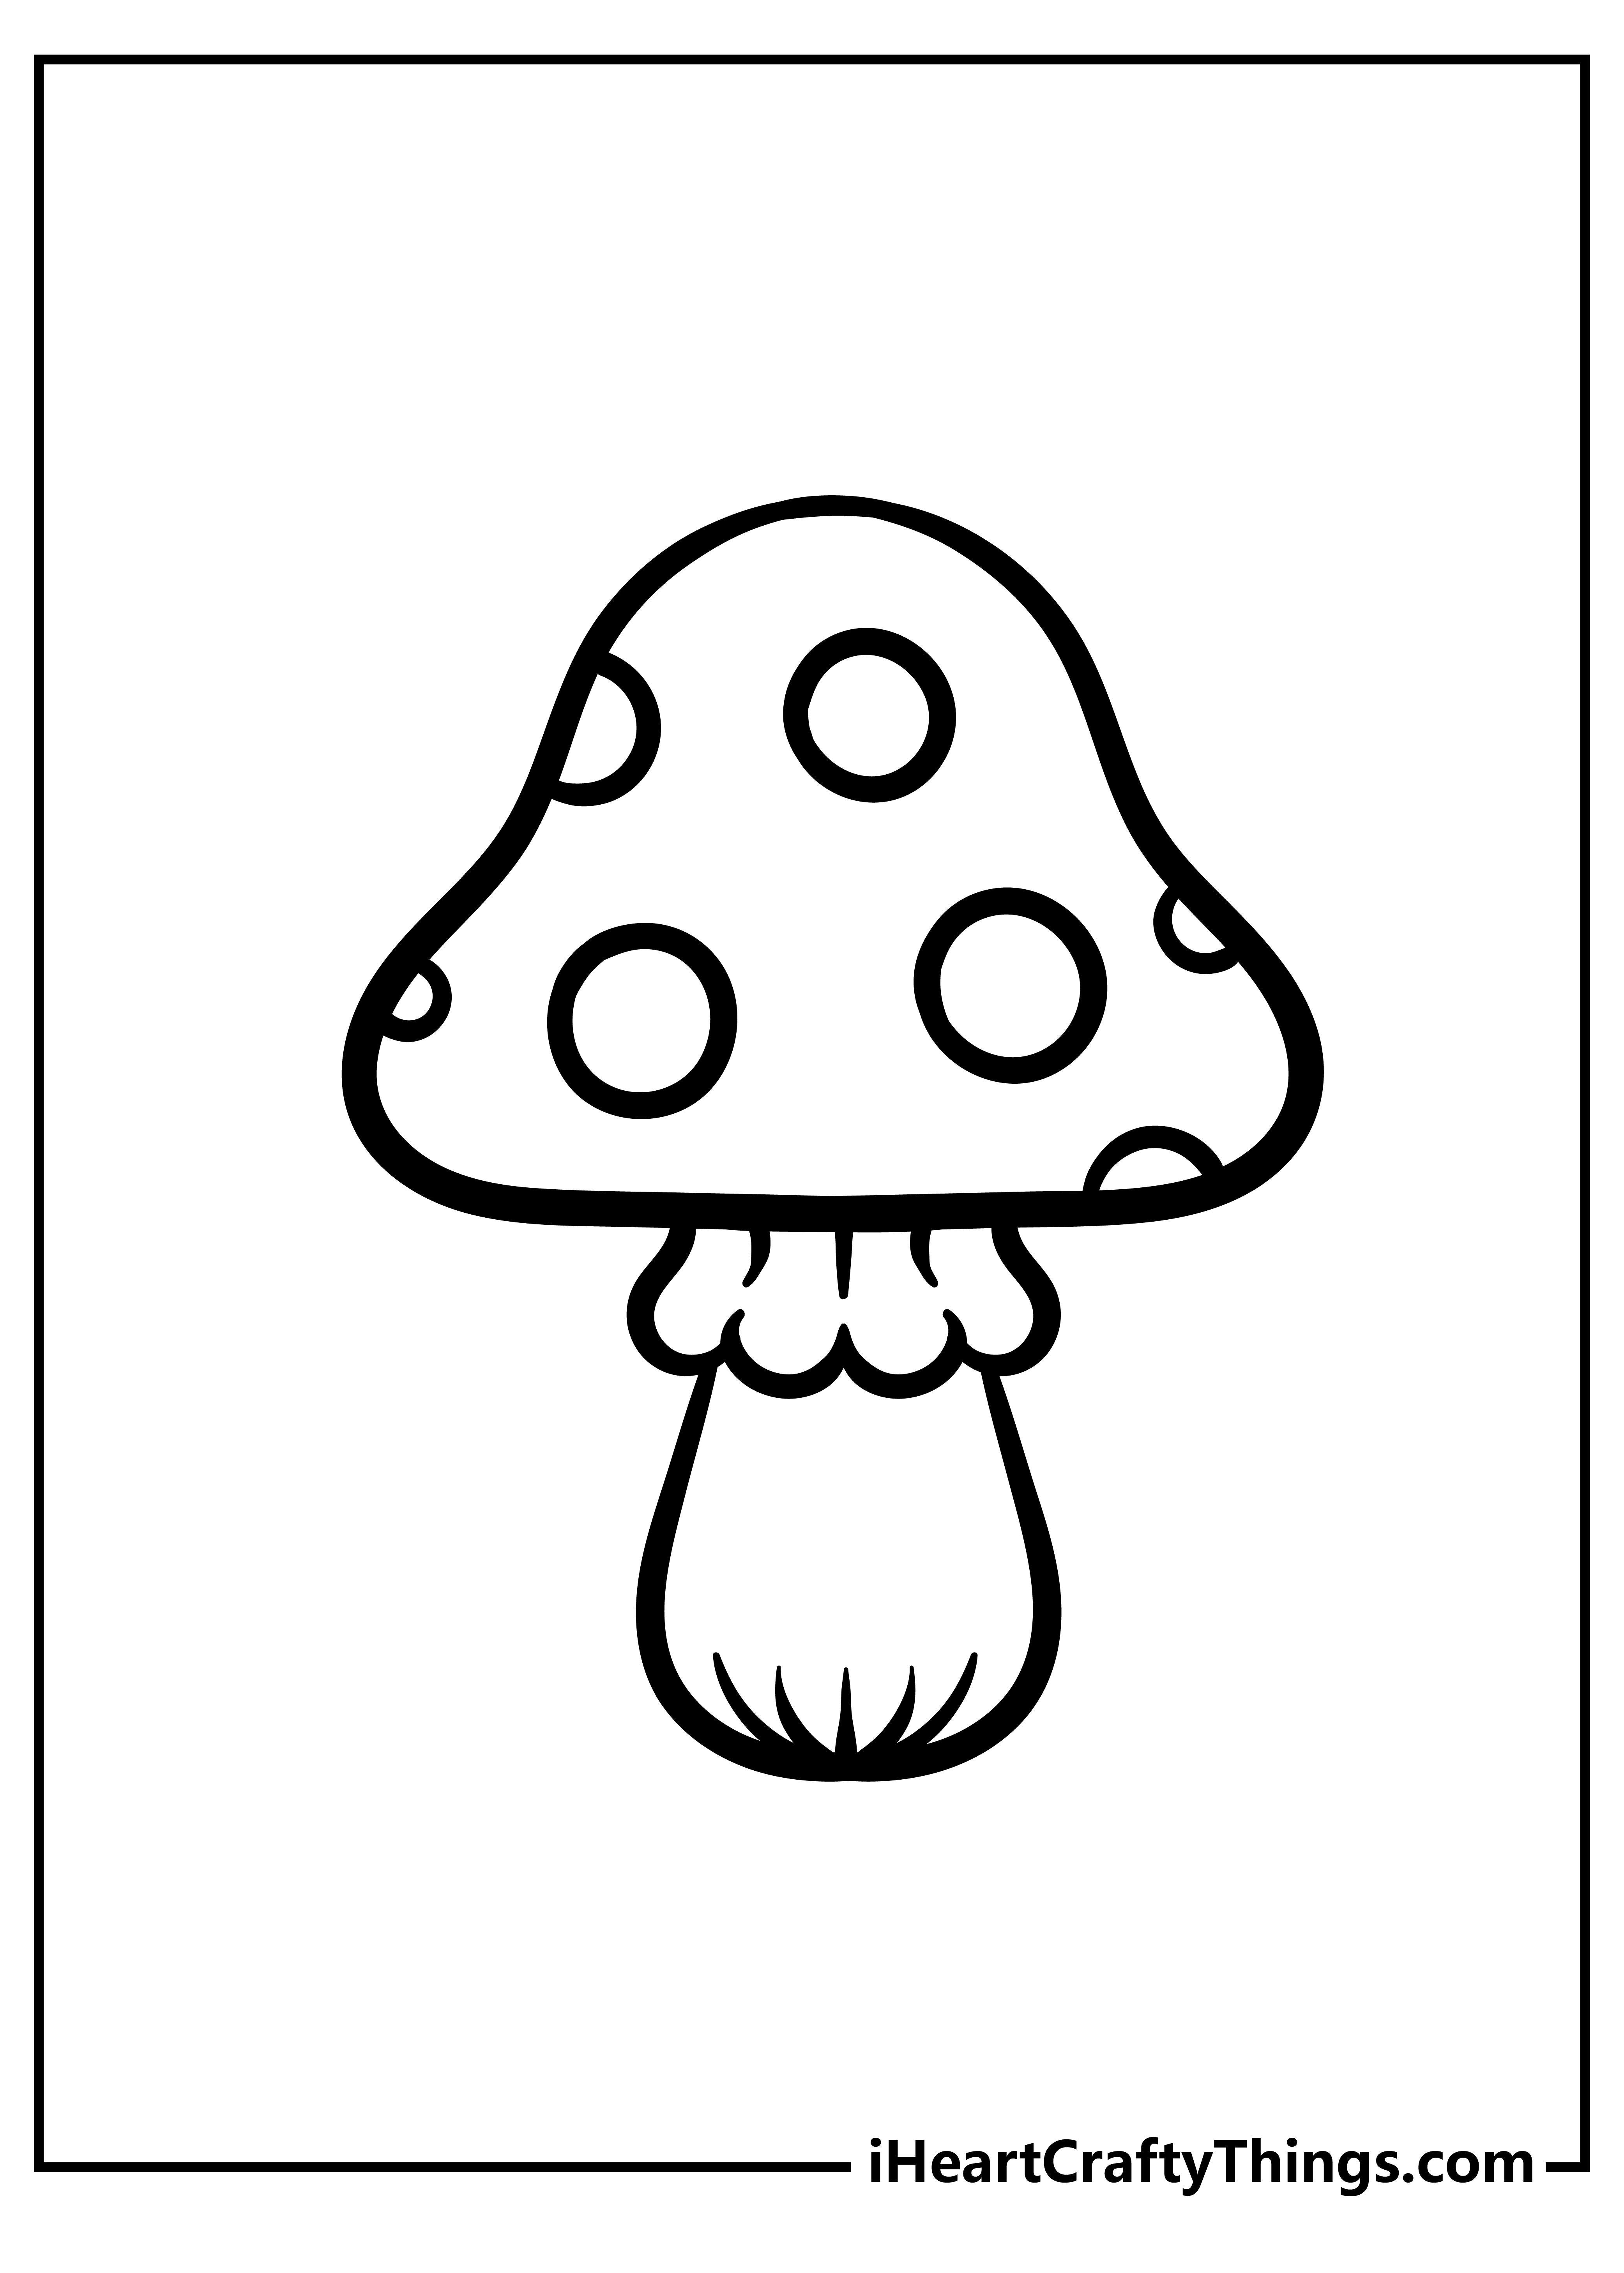 Mushroom Coloring Pages for preschoolers free printable